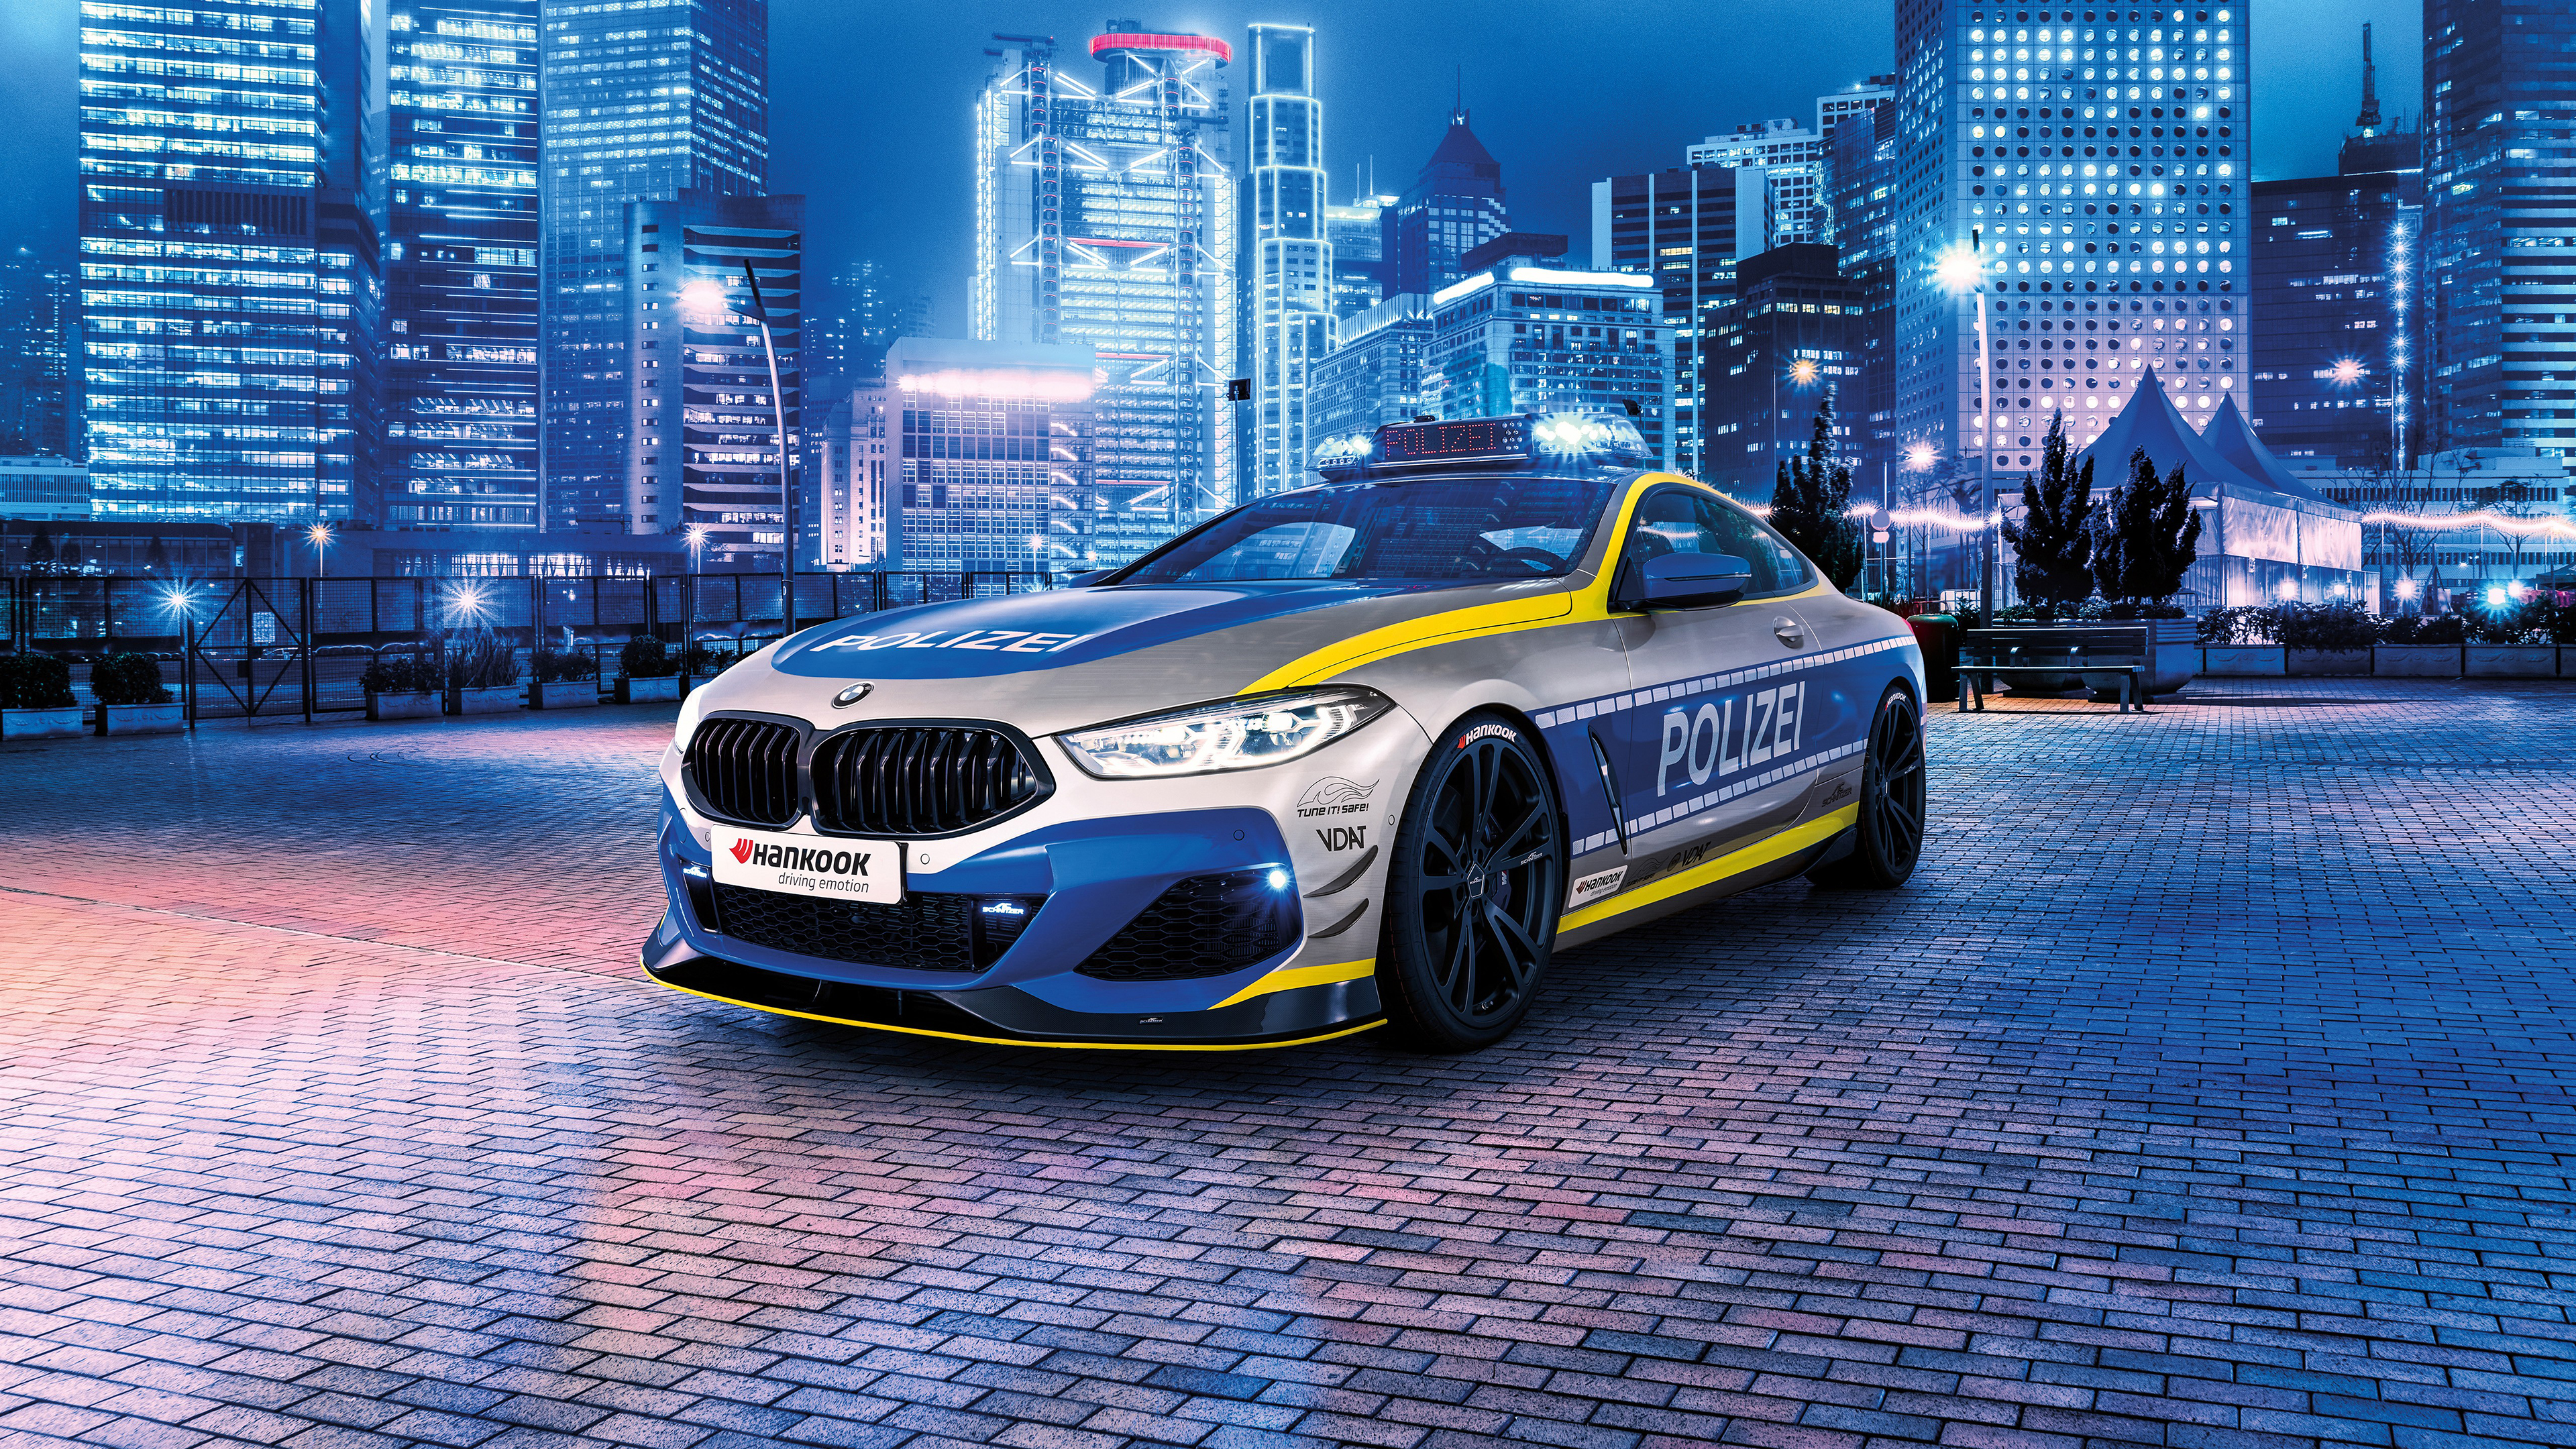 Wallpaper BMW polizei cop car